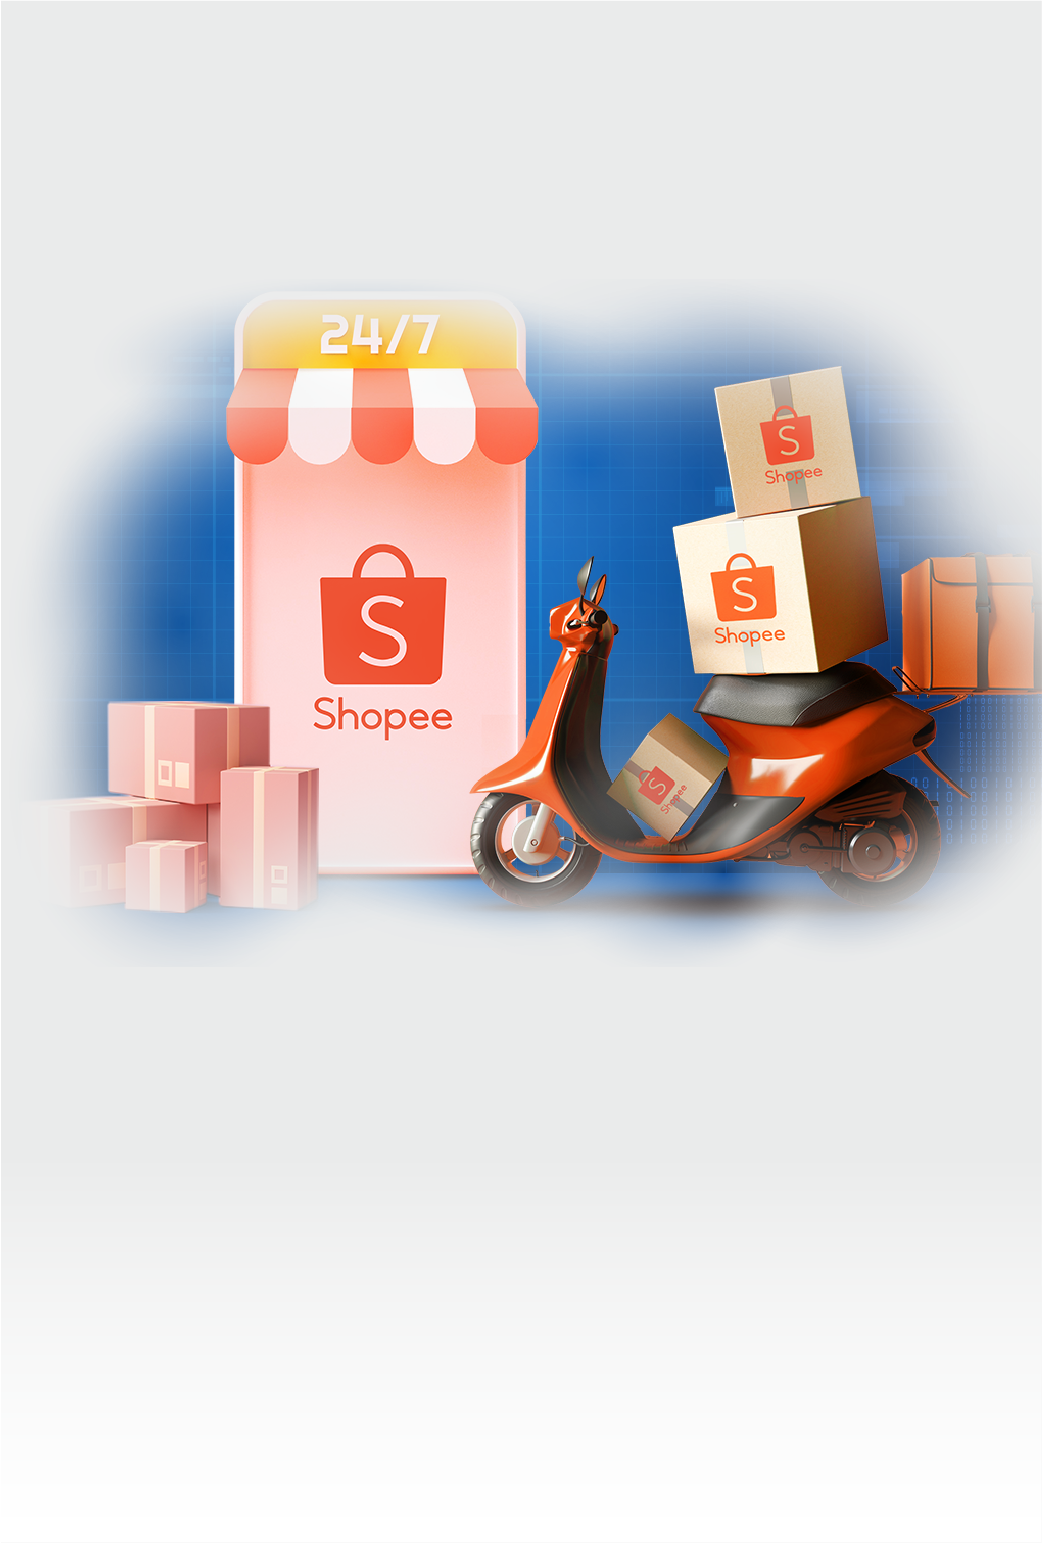 05. Shopee_Banner mobile